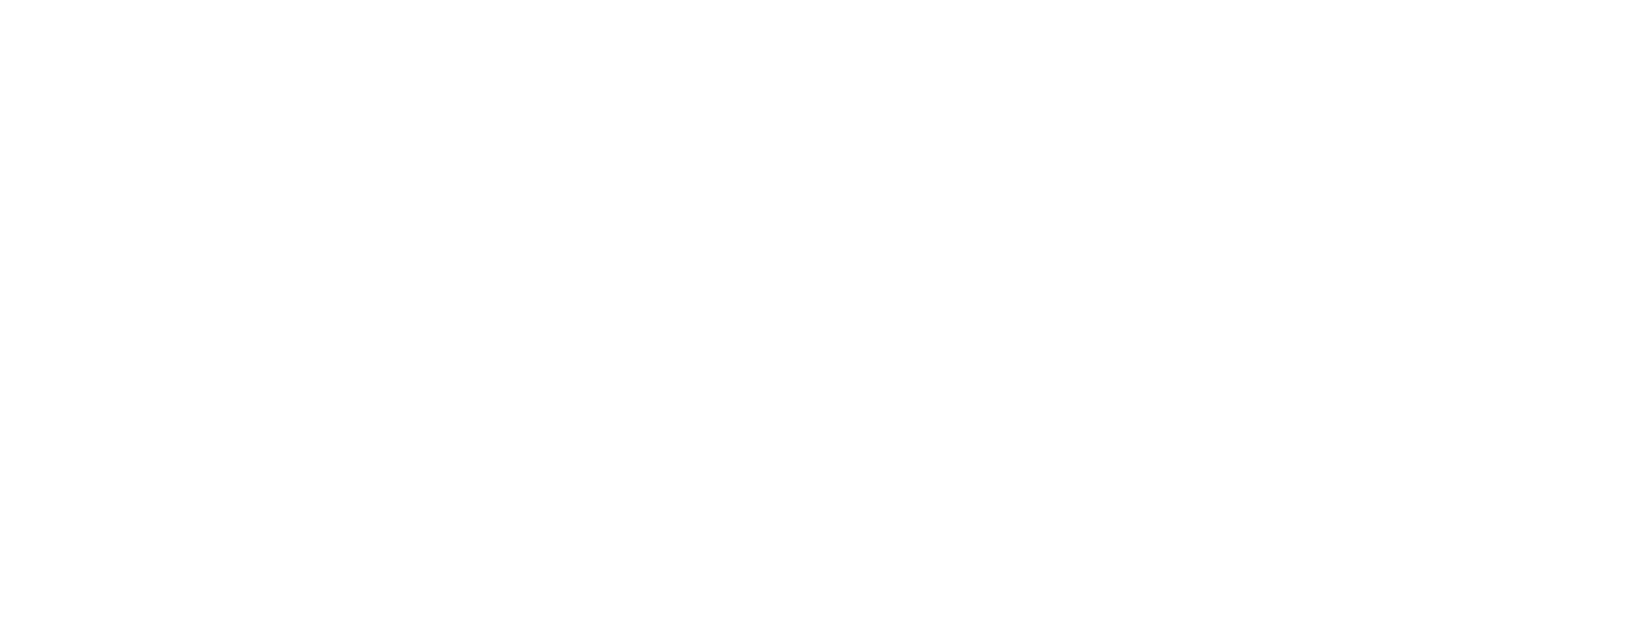 DracoSlides logo